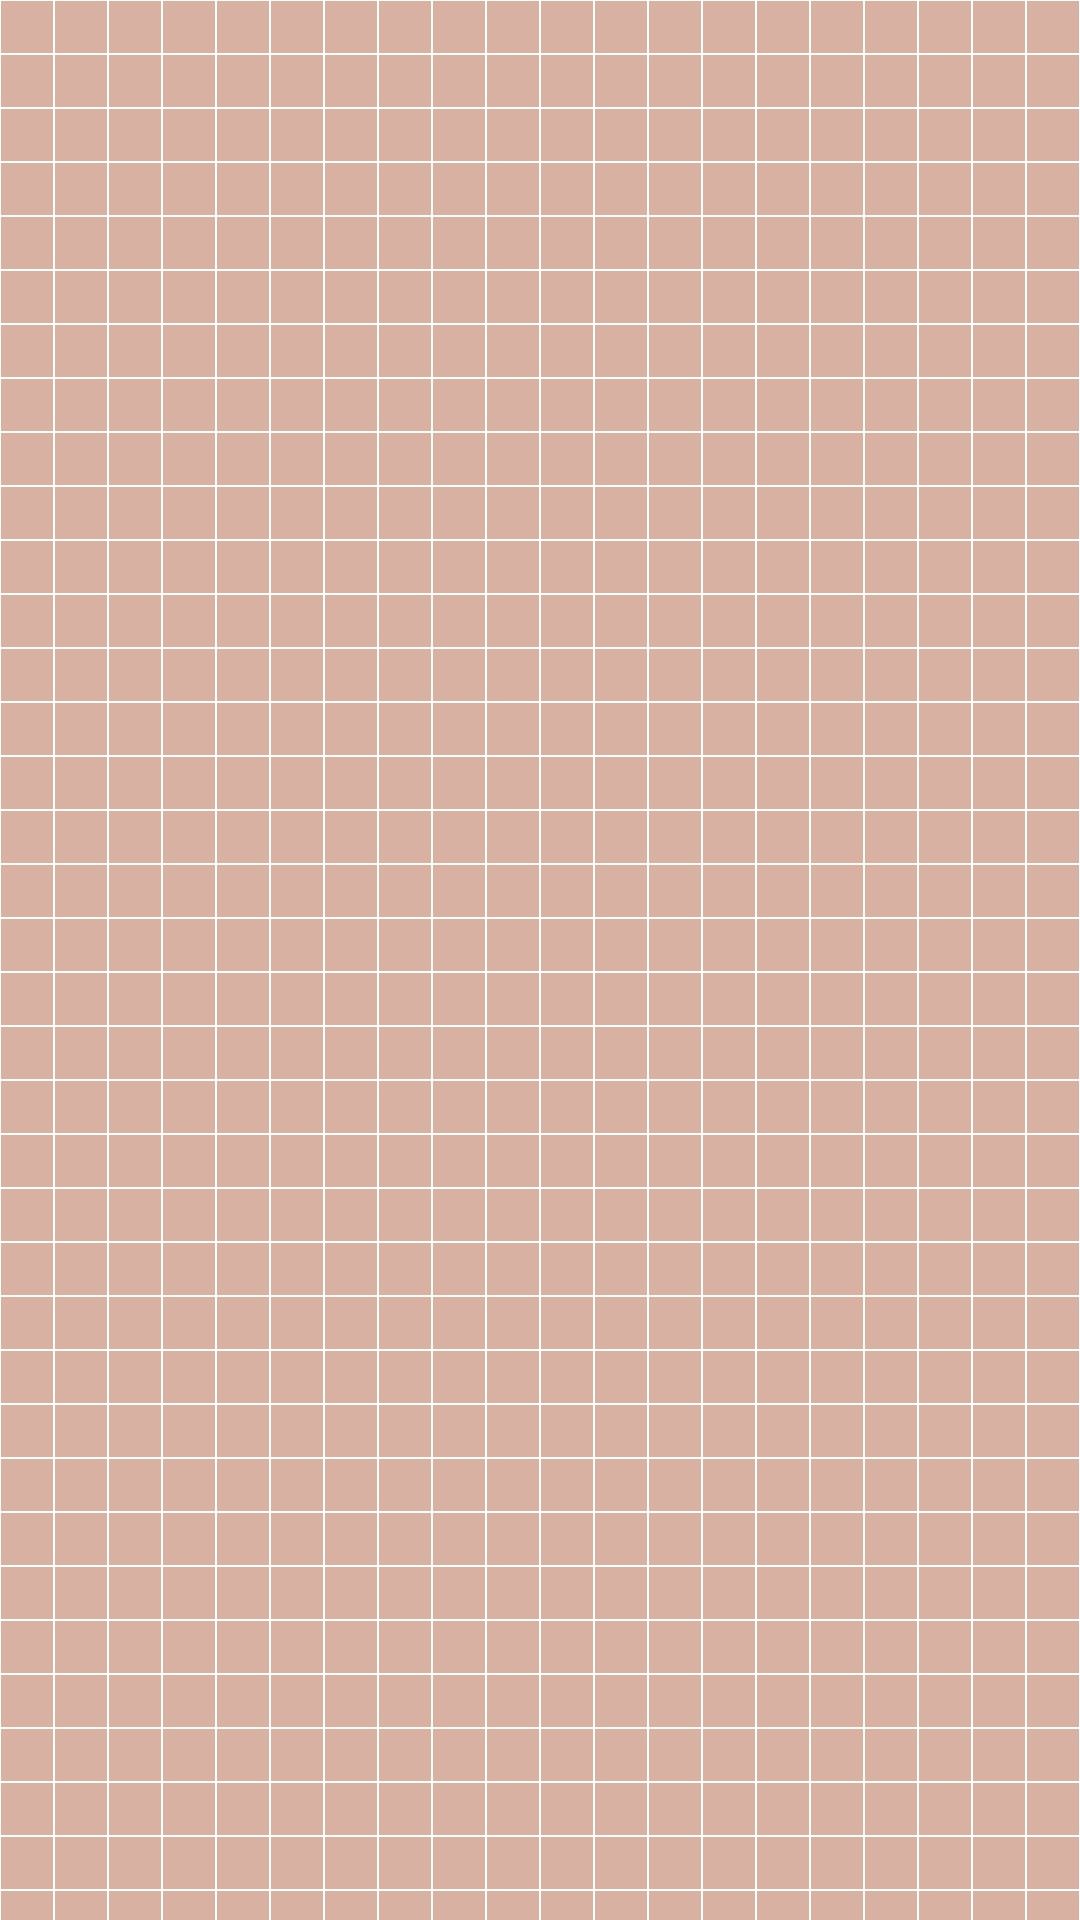 tumblr #wallpaper #nude | Triste fondo de pantalla estética en 2019 | Cuadrícula